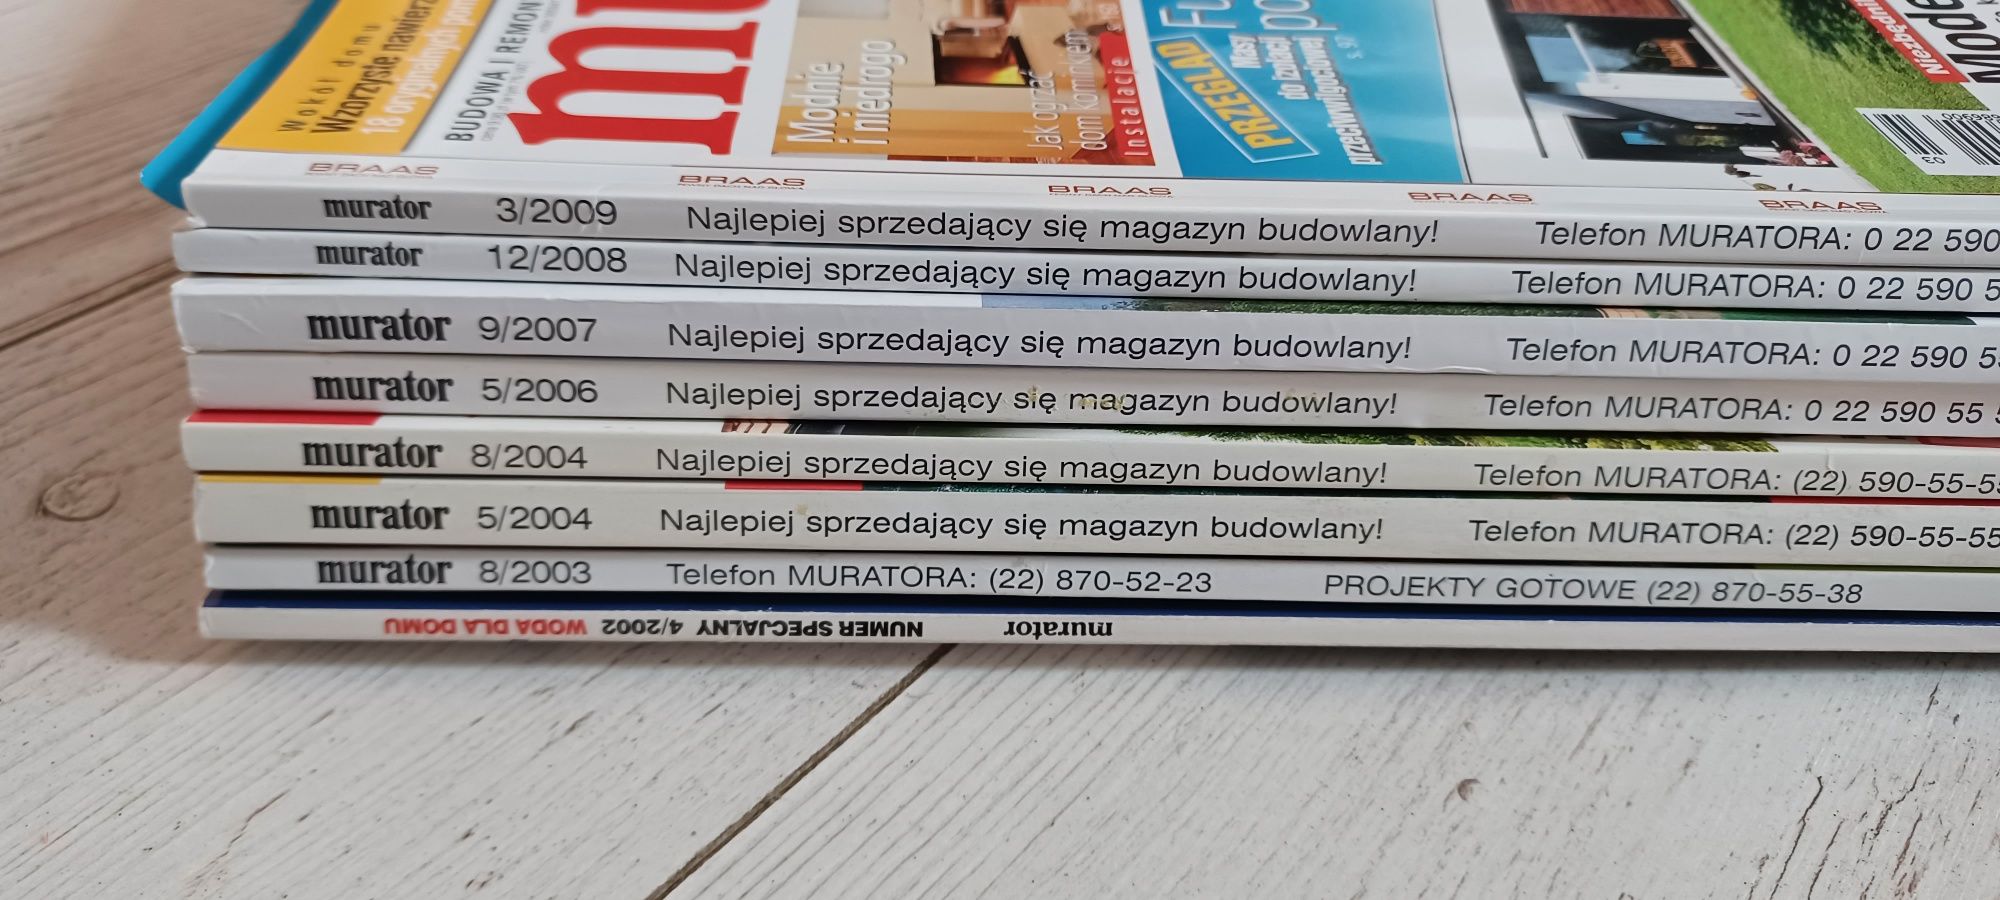 Murator magazyn budowlany 2002,2003,2004,2006,2007,2008,2009